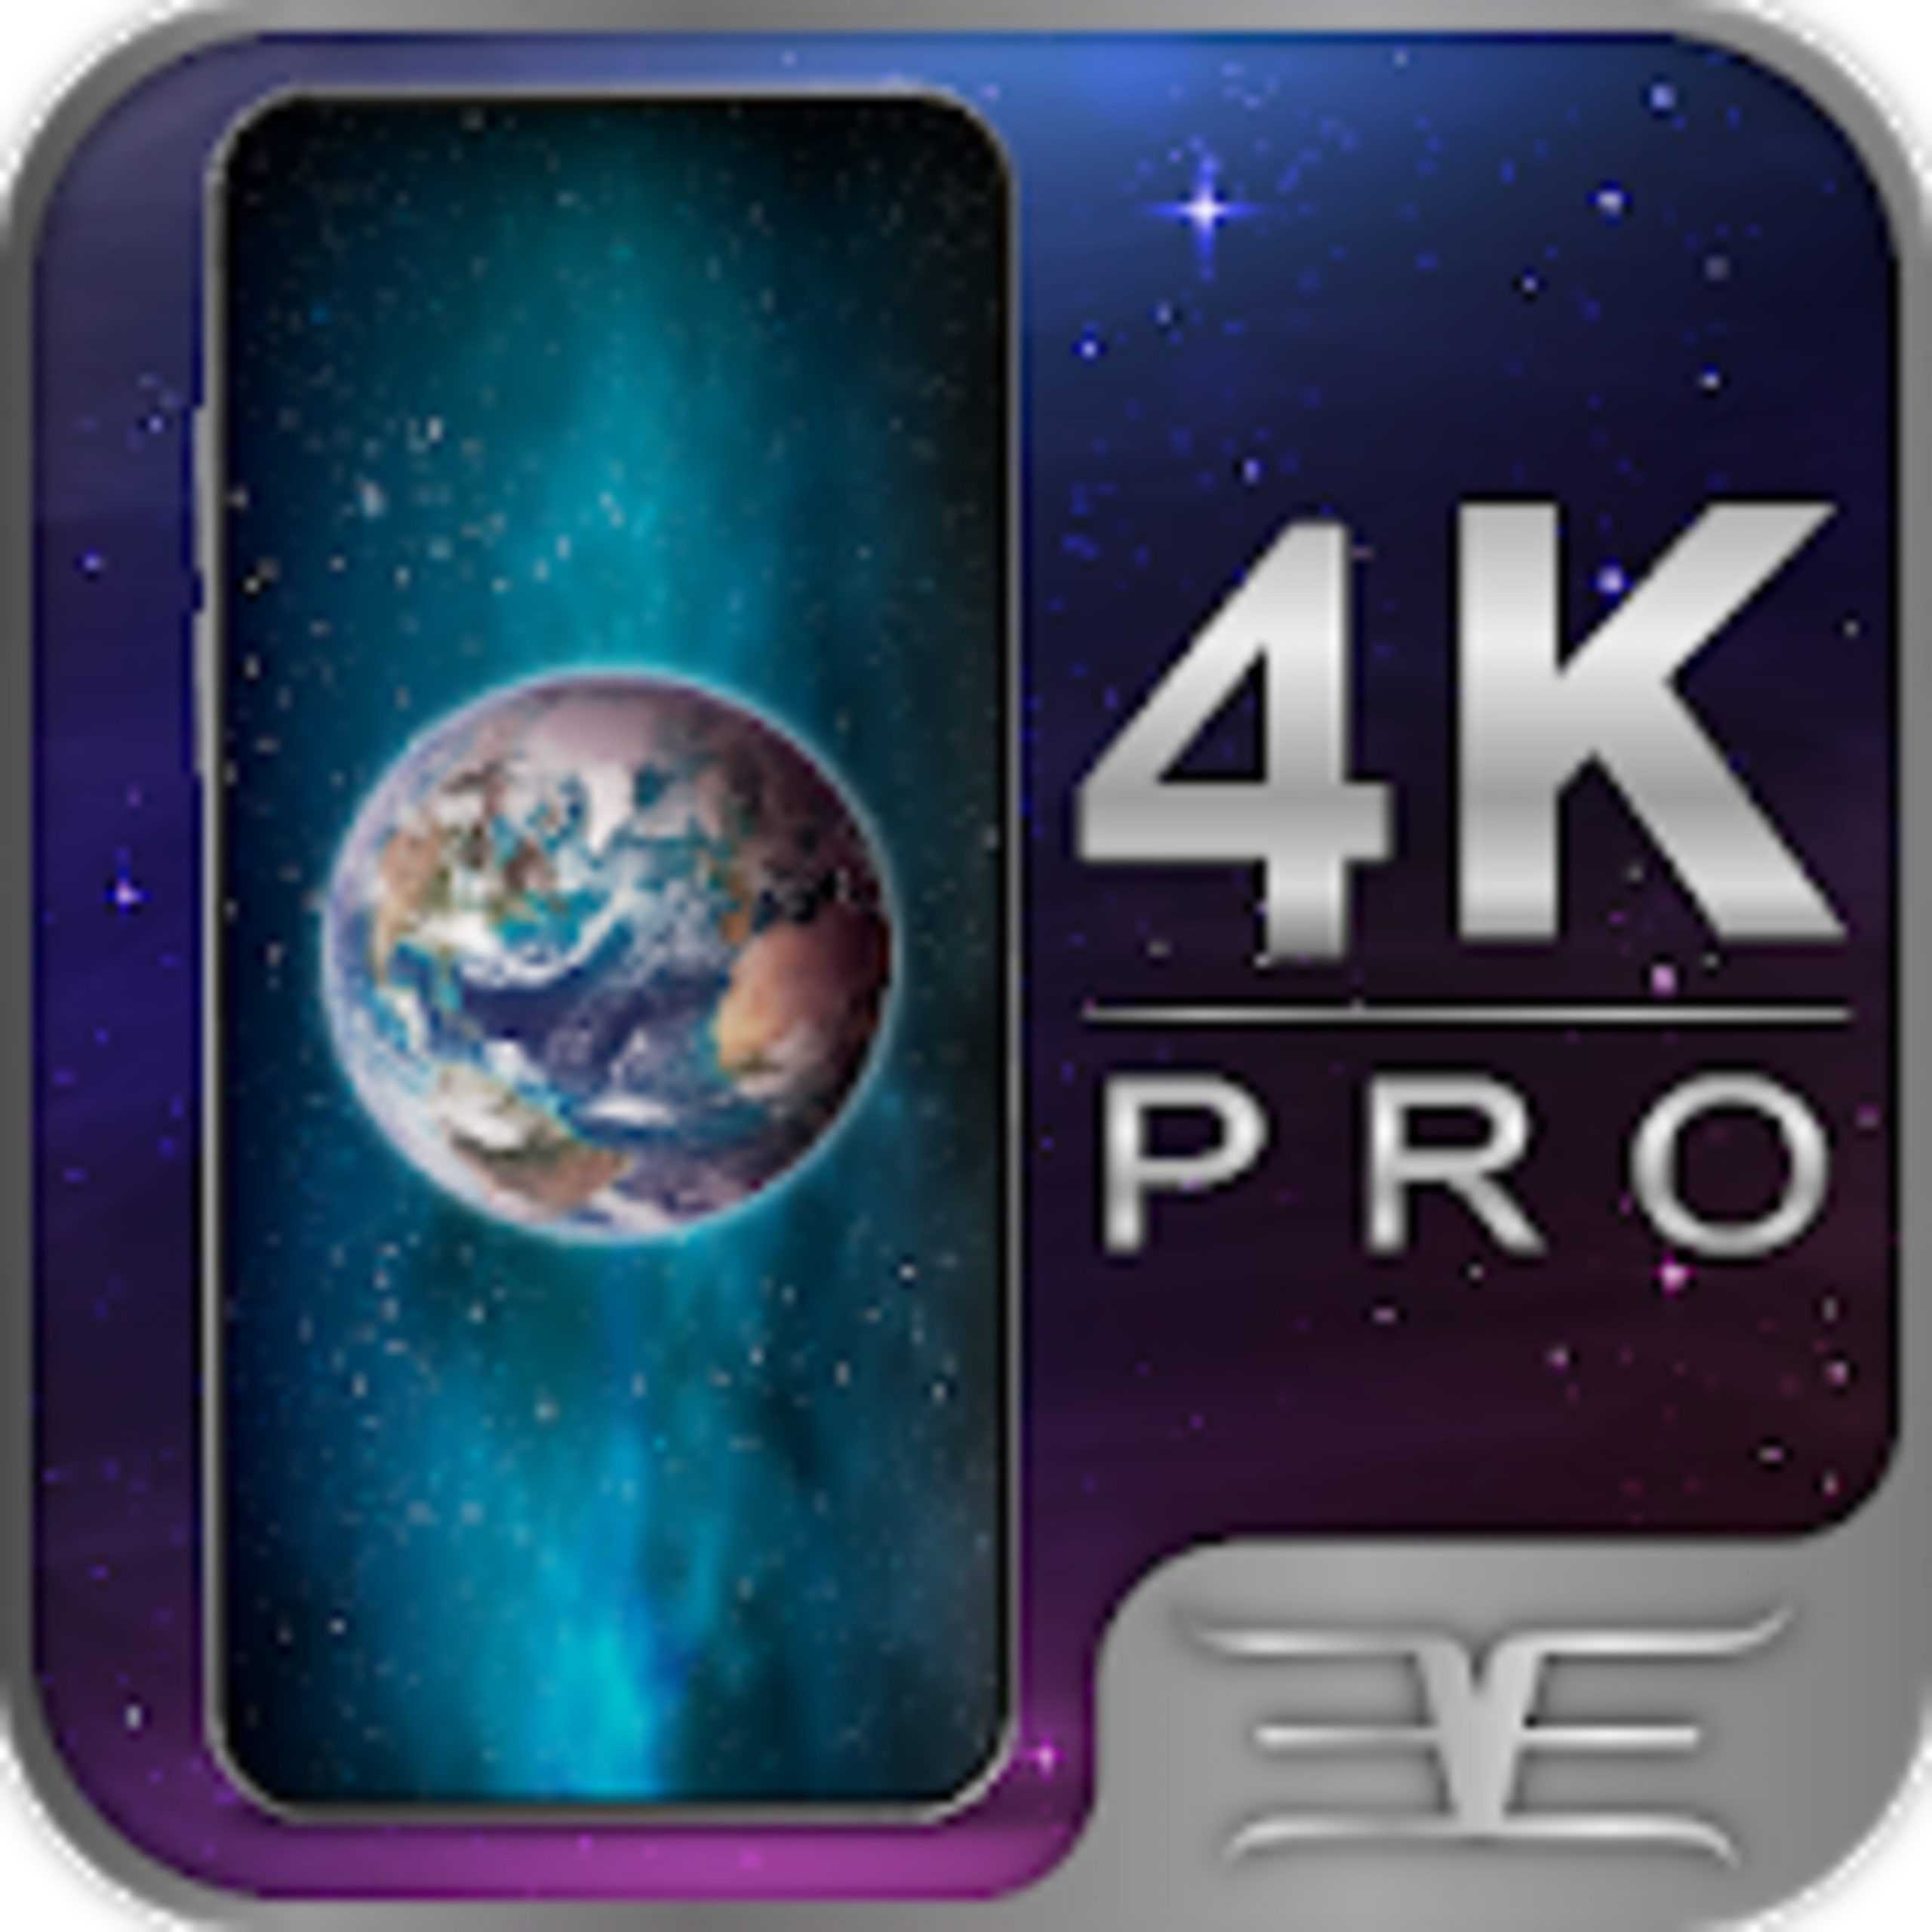 Space Galaxy Wallpaper HD Pro v2.3 (Paid) APK